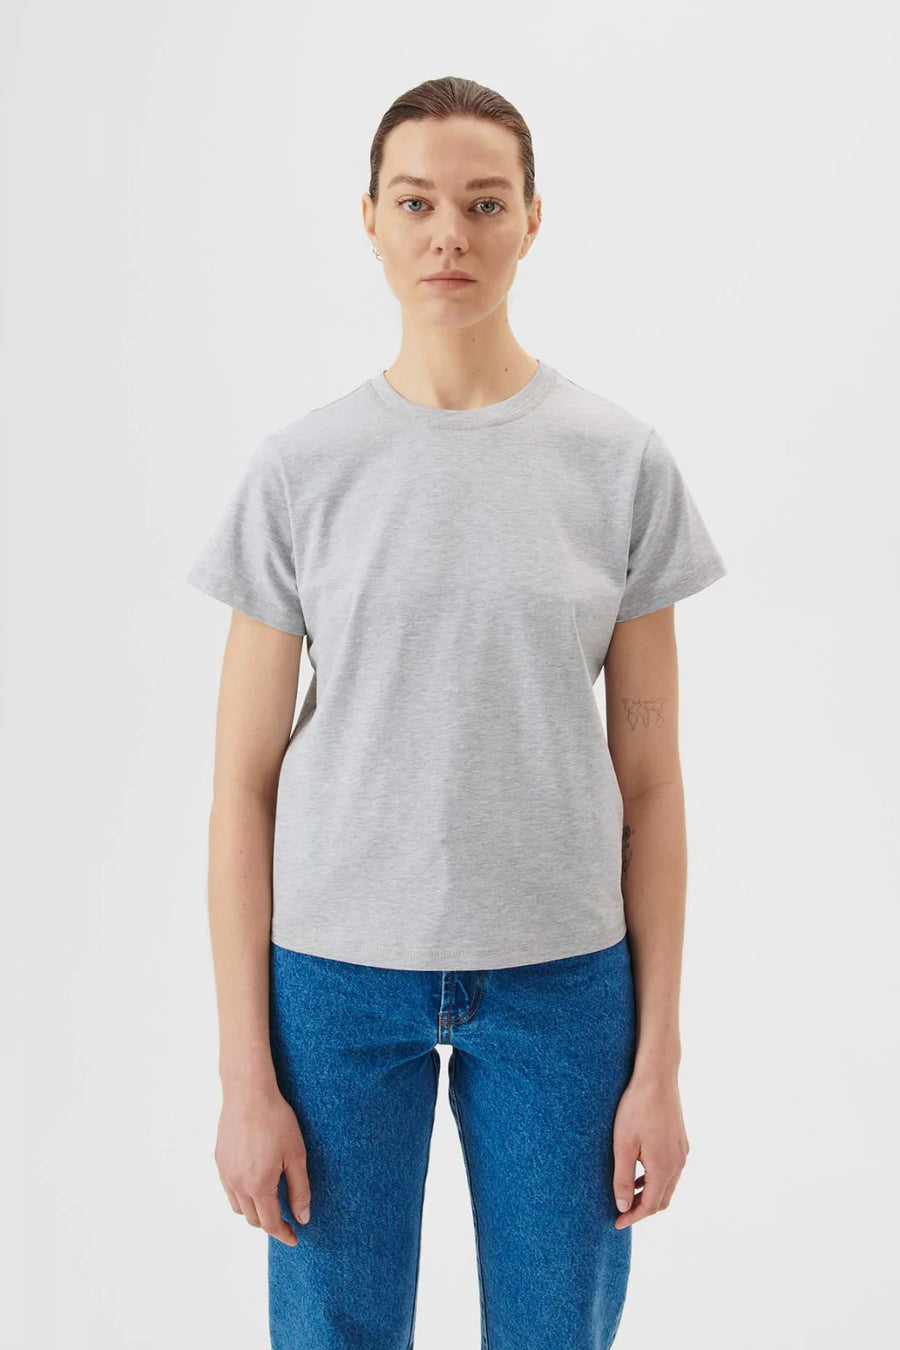 Les Goodies - Elementy Wear Bas Grey T-shirt